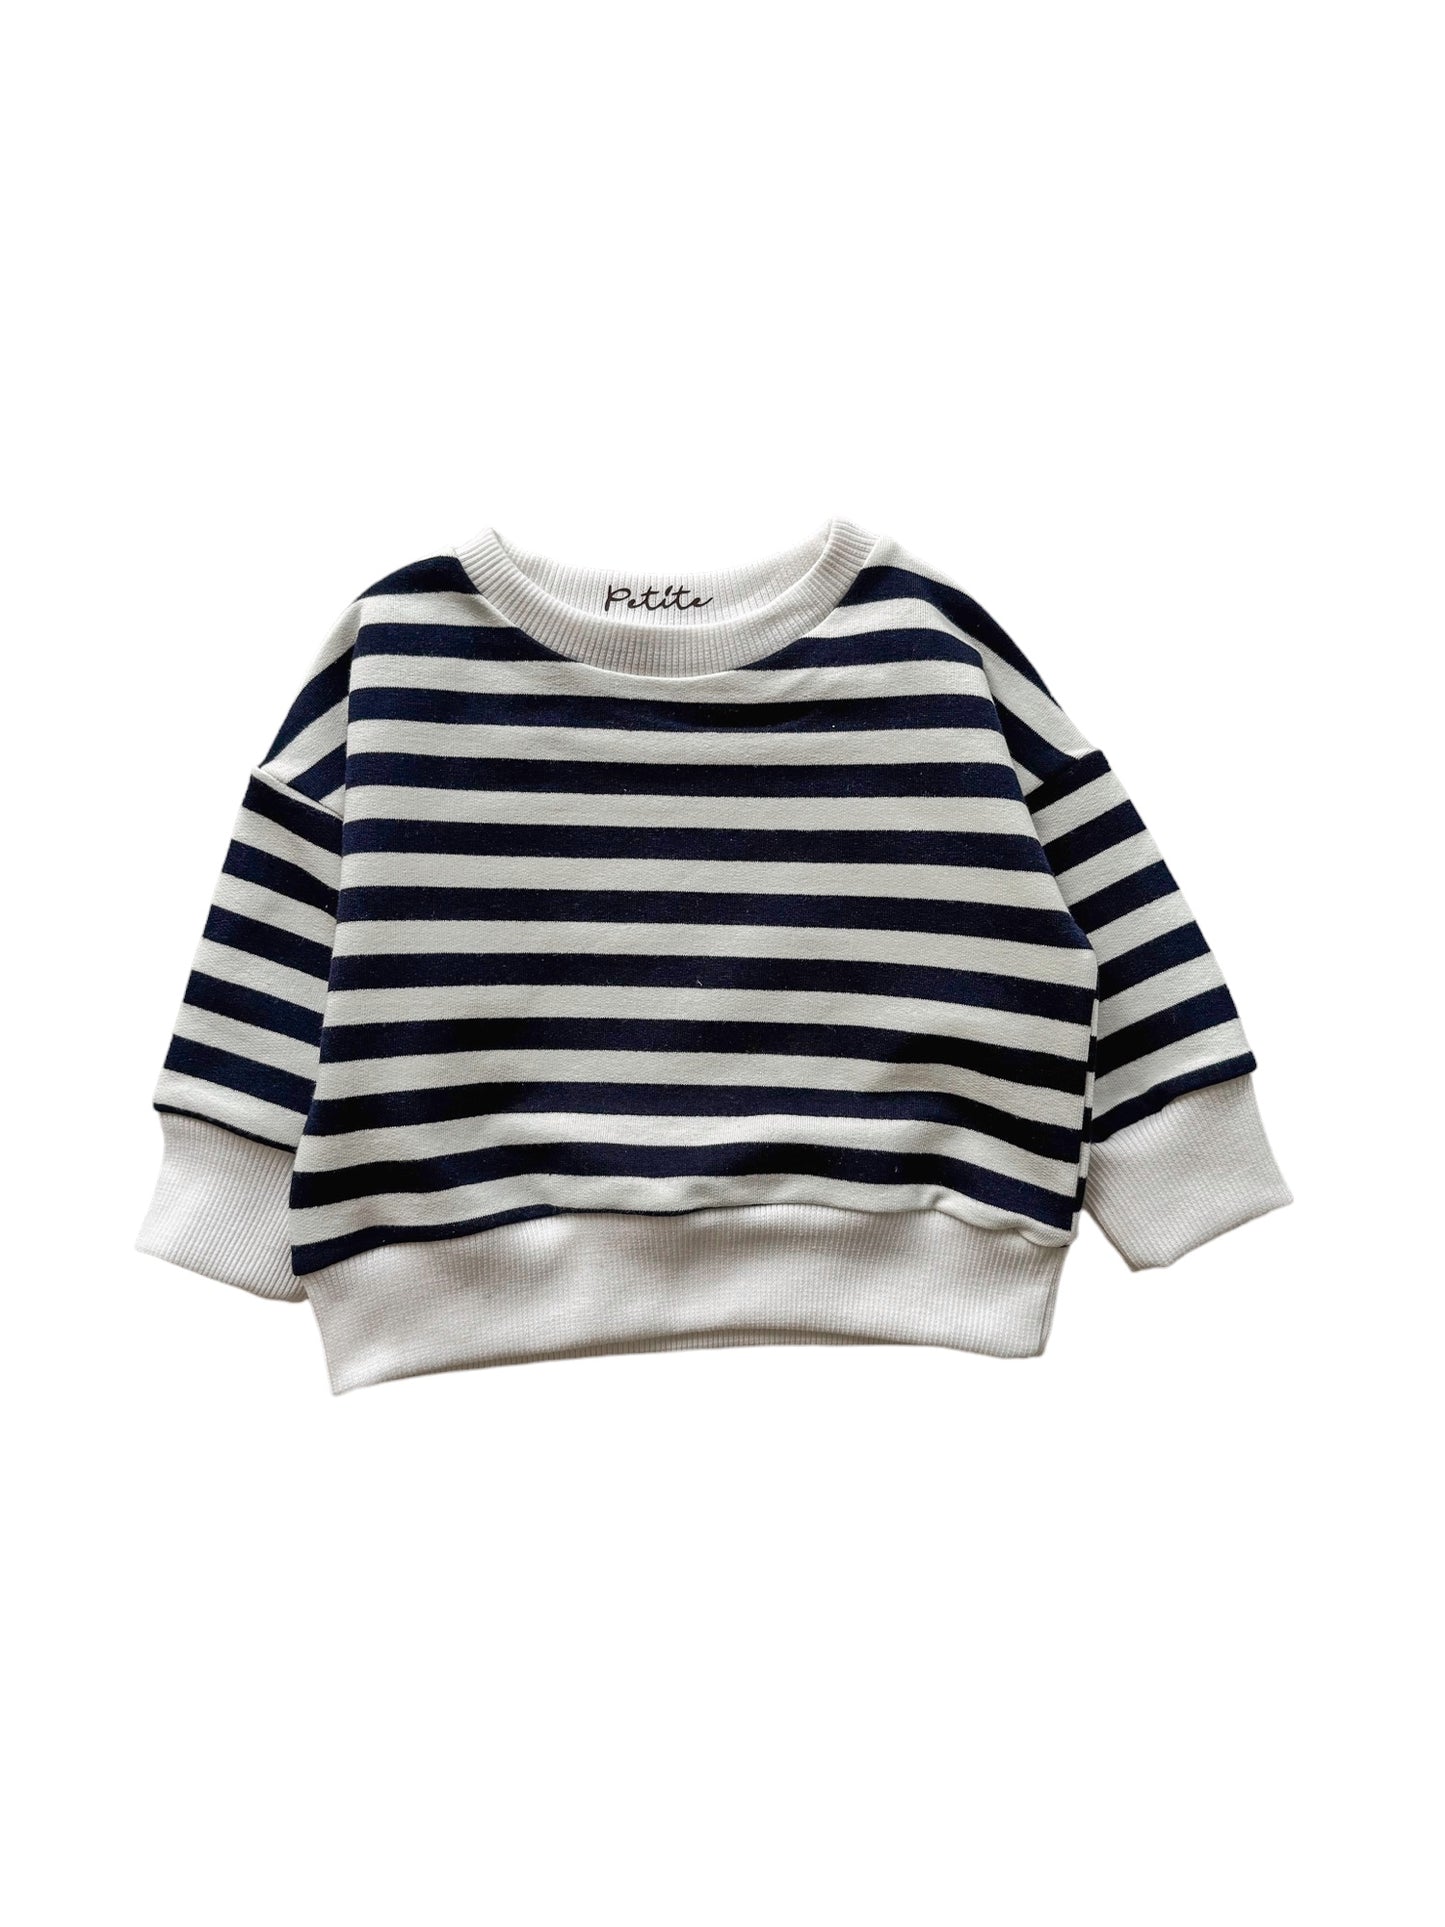 Cotton sweater / navy stripes